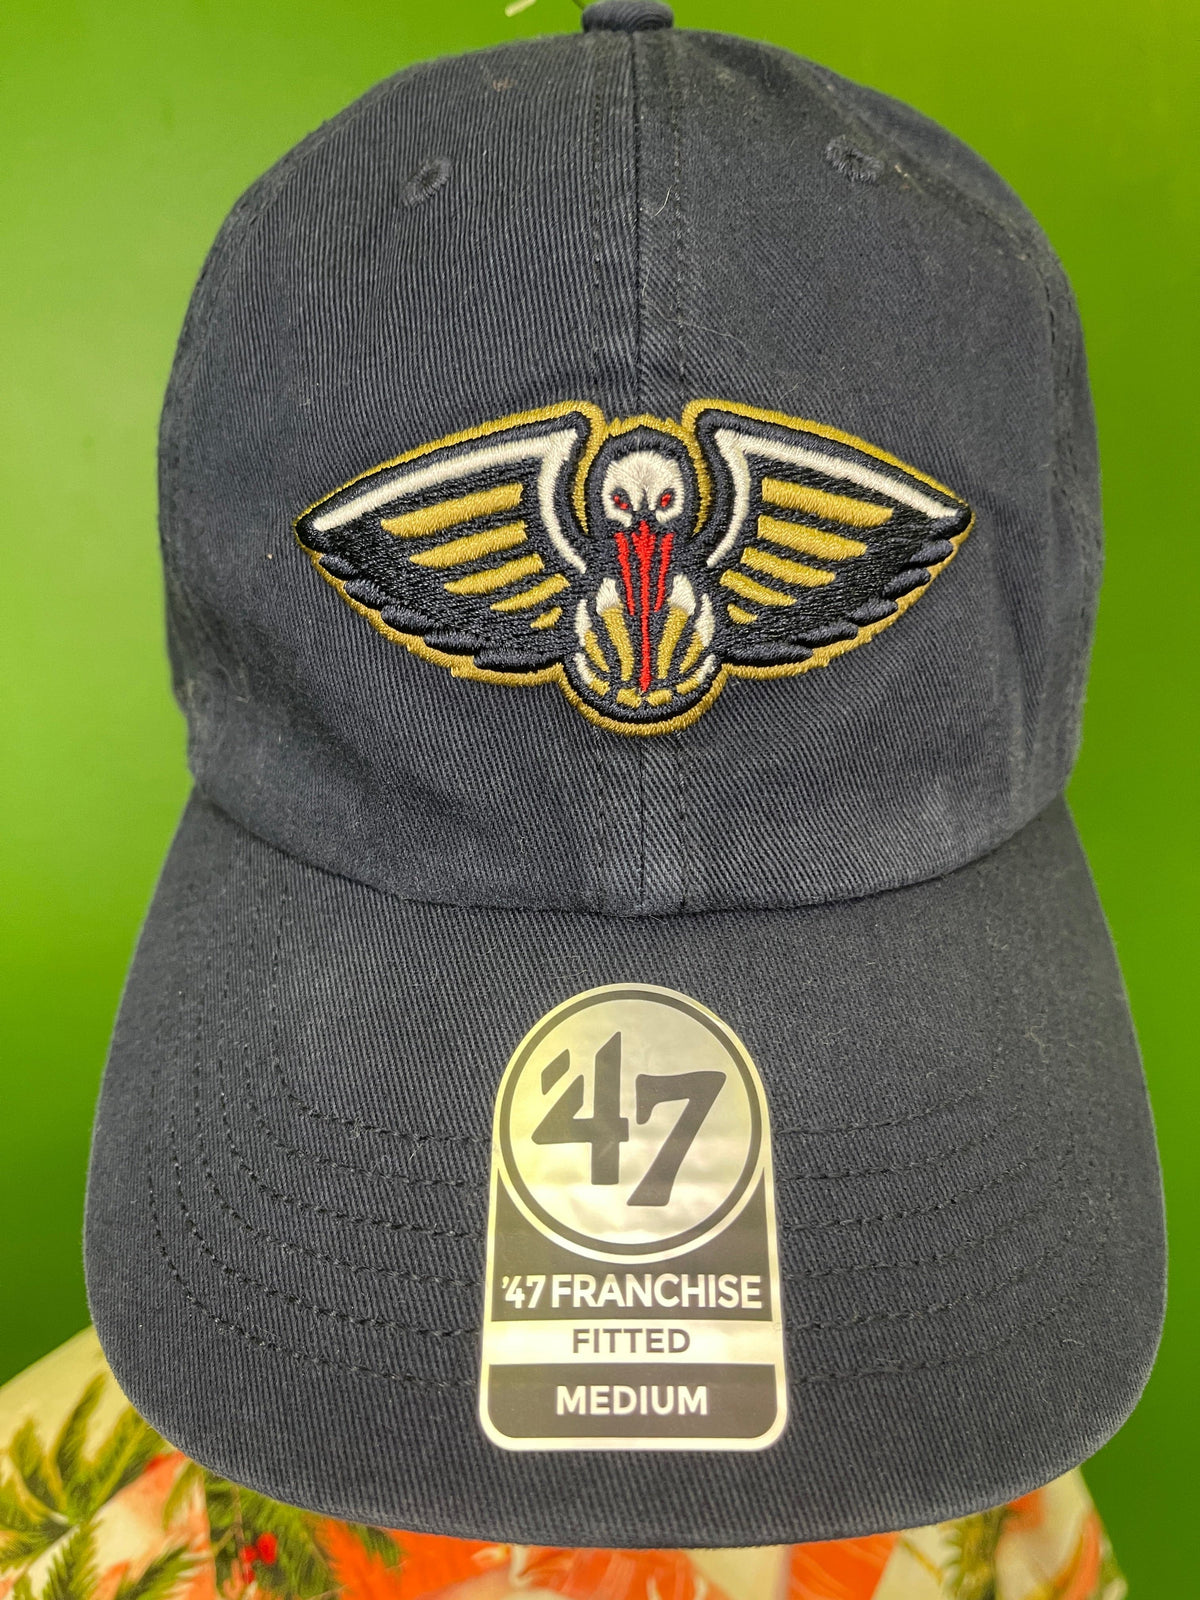 NHL New Orleans Pelicans '47 Franchise Baseball Hat/Cap Medium NWT